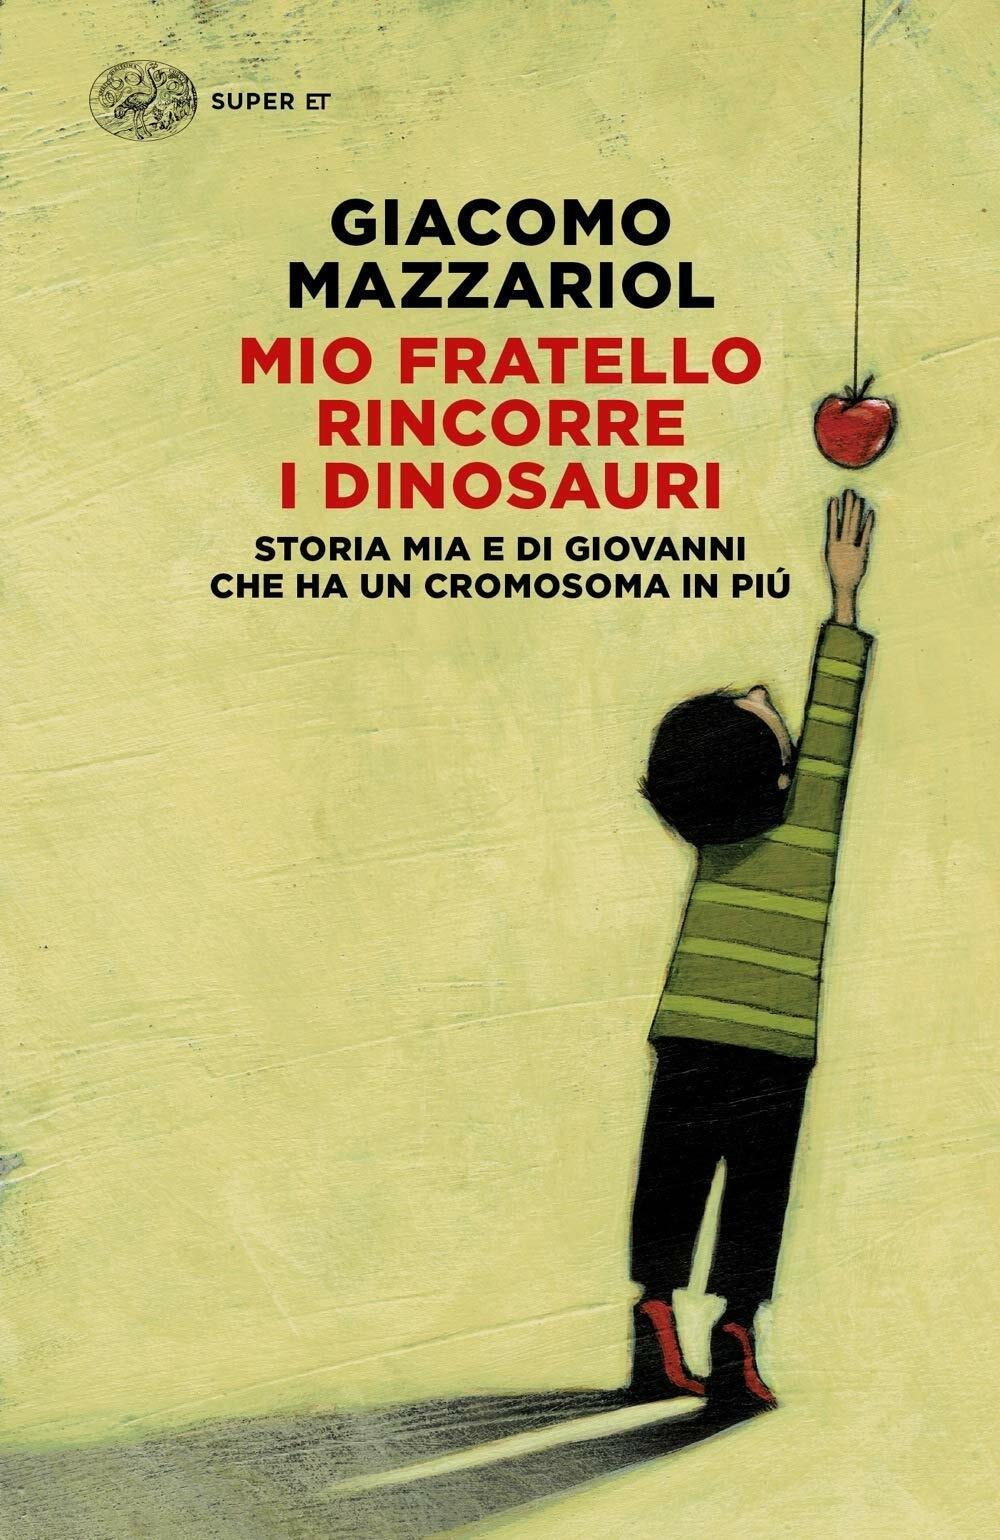 Mio fratello rincorre i dinosauri - libro di Giacomo Mazzariol 